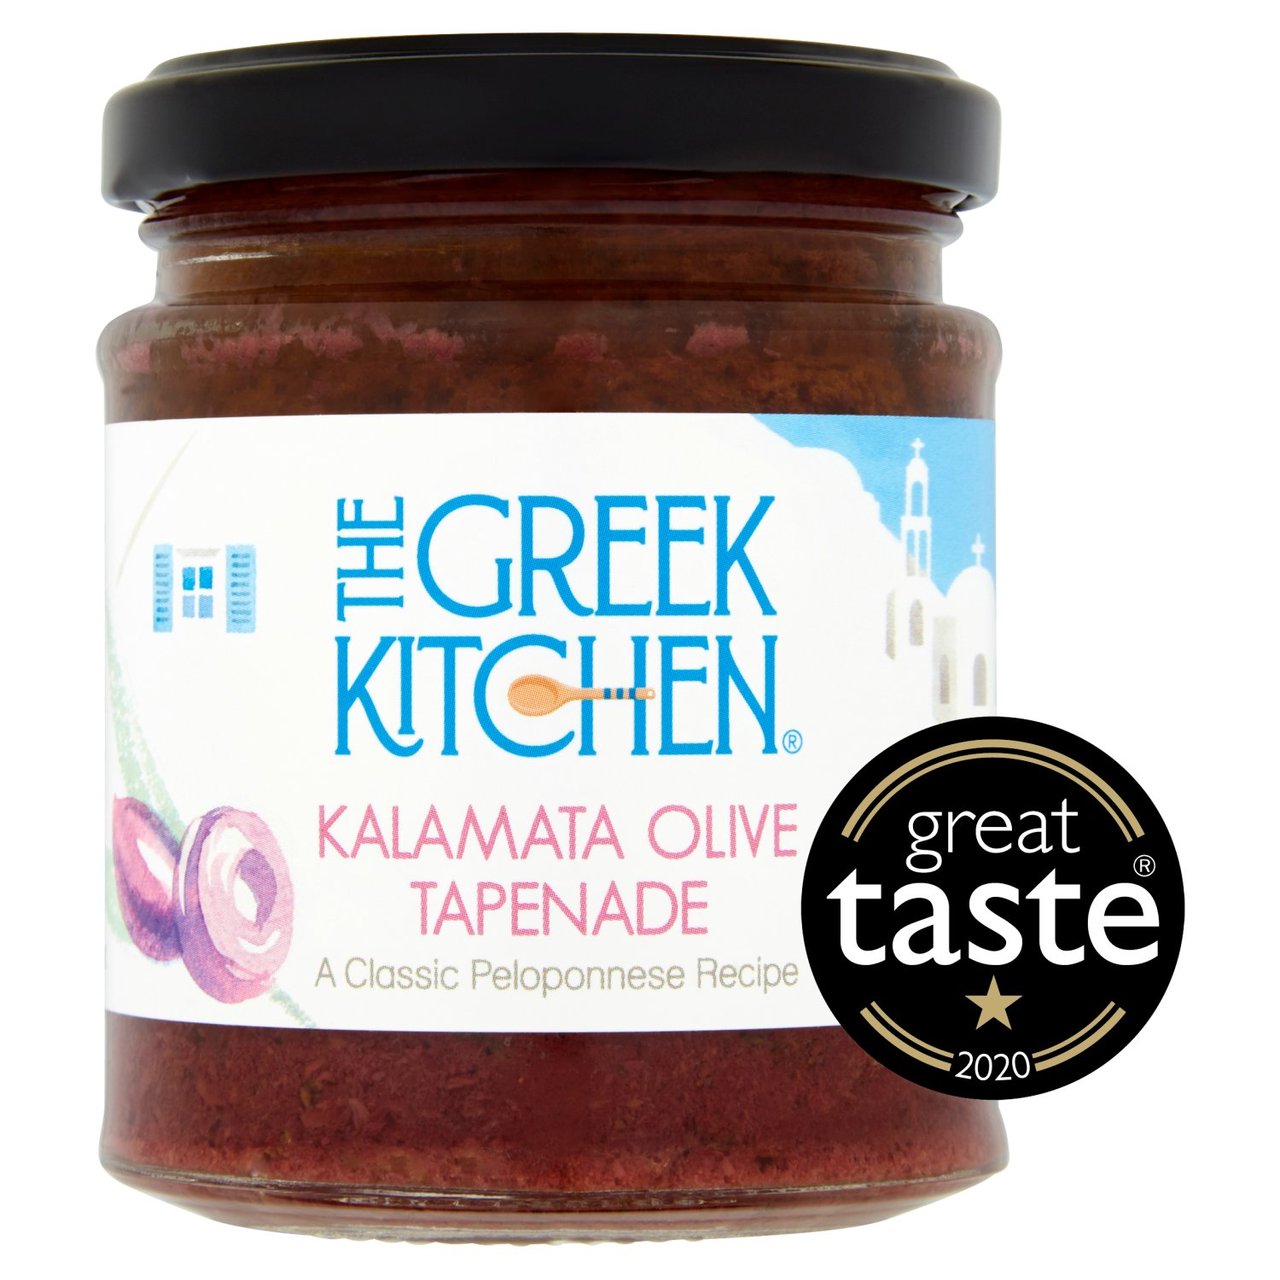 The Greek Kitchen Kalamata Olive Tapenade